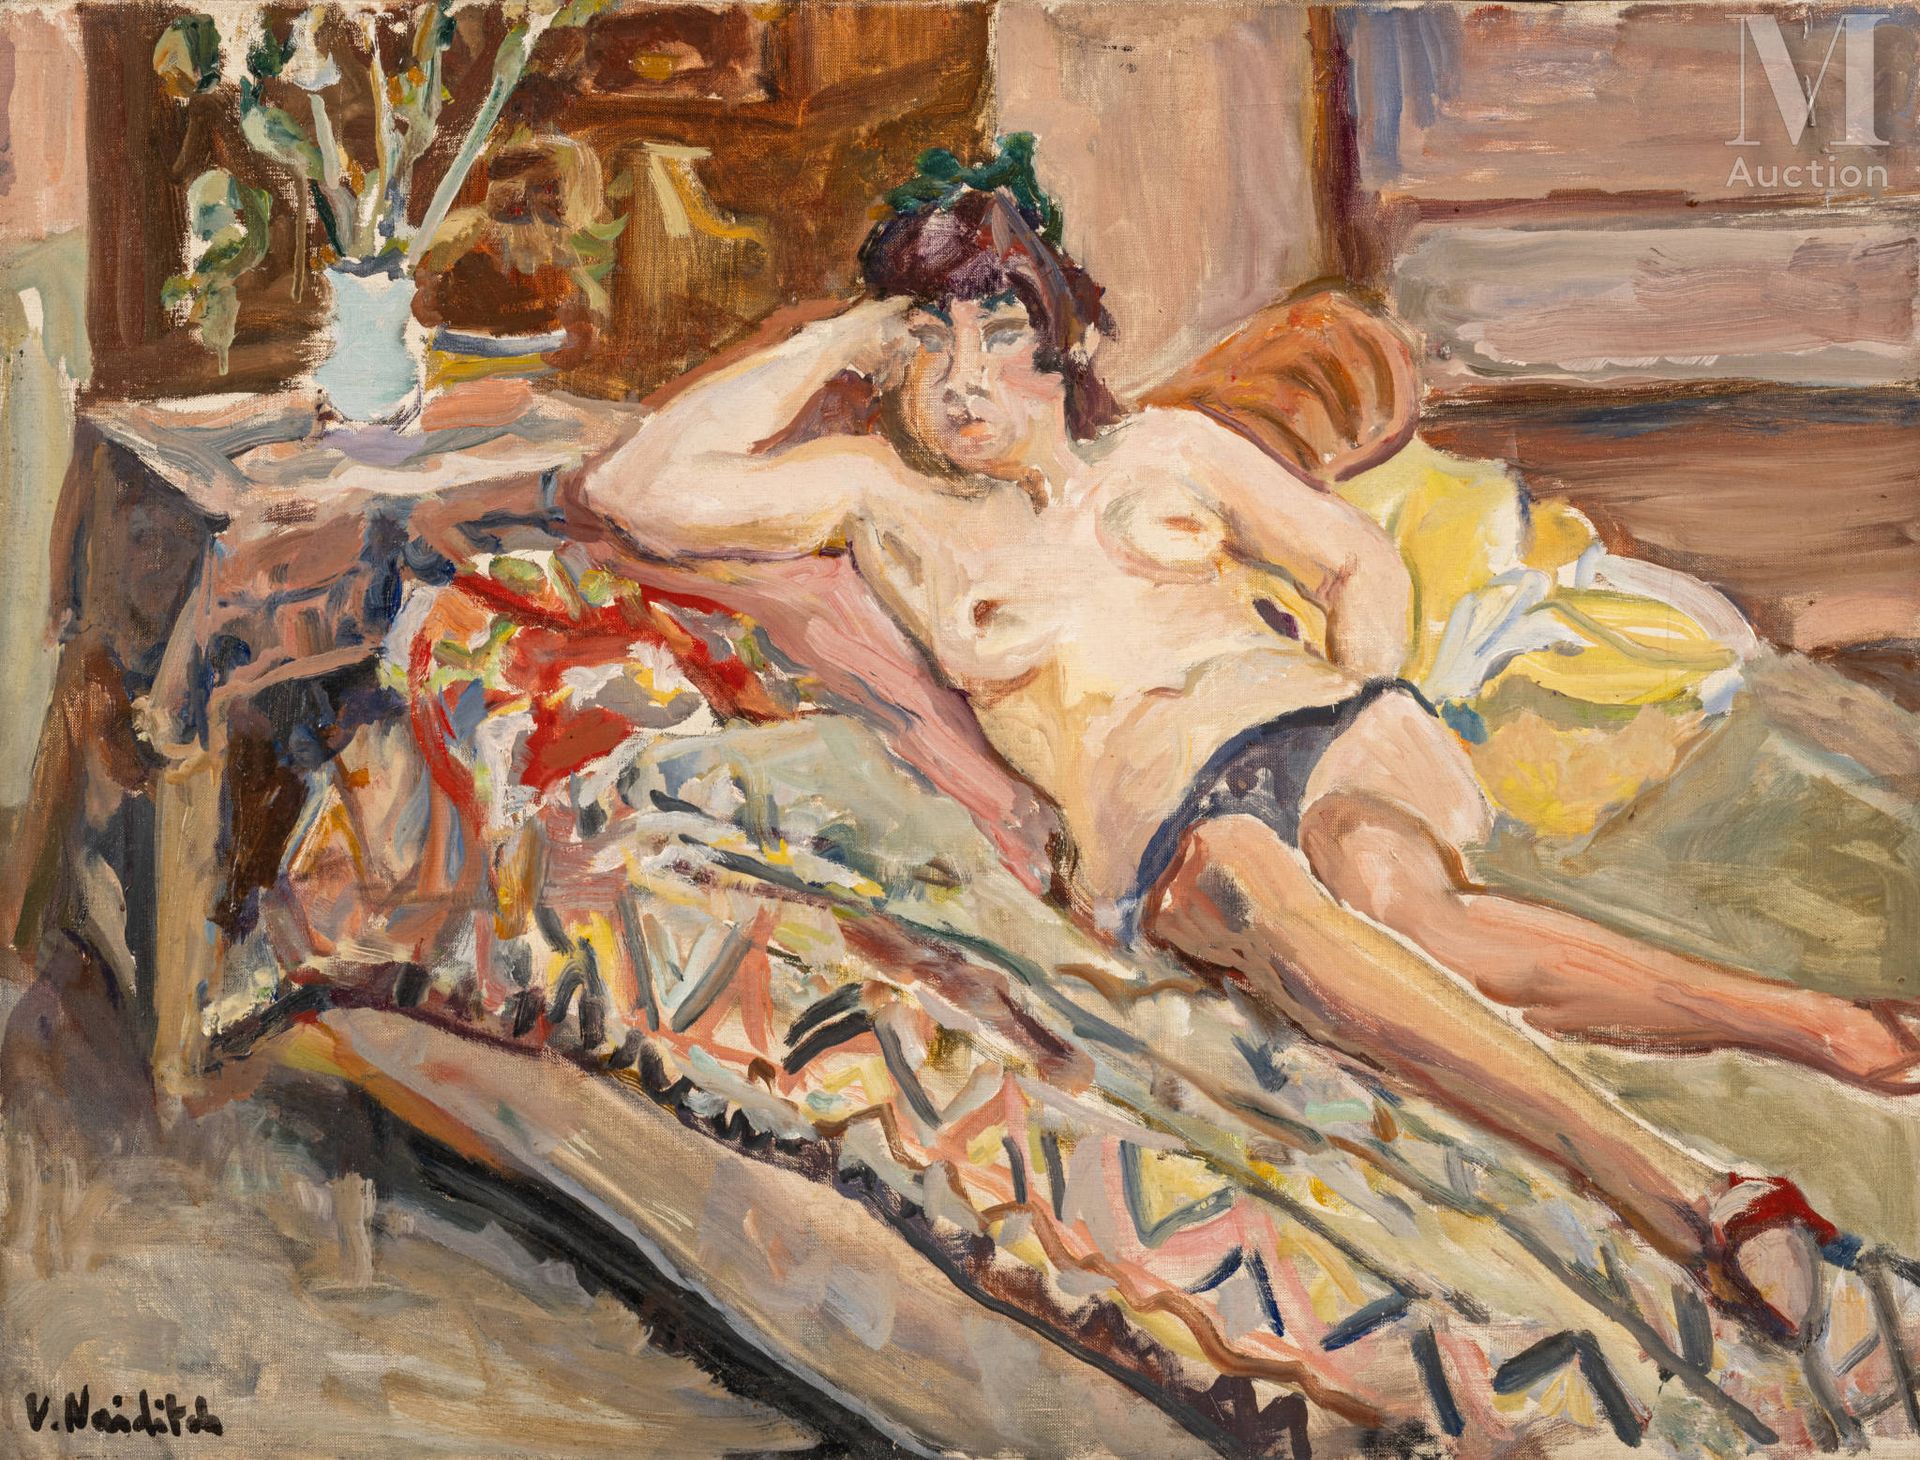 Vladimir NAIDITCH (Moscou 1903 - Paris 1981) 沙发上的裸体

布面油画
46,5 x 61 cm
左下方有签名 "N&hellip;